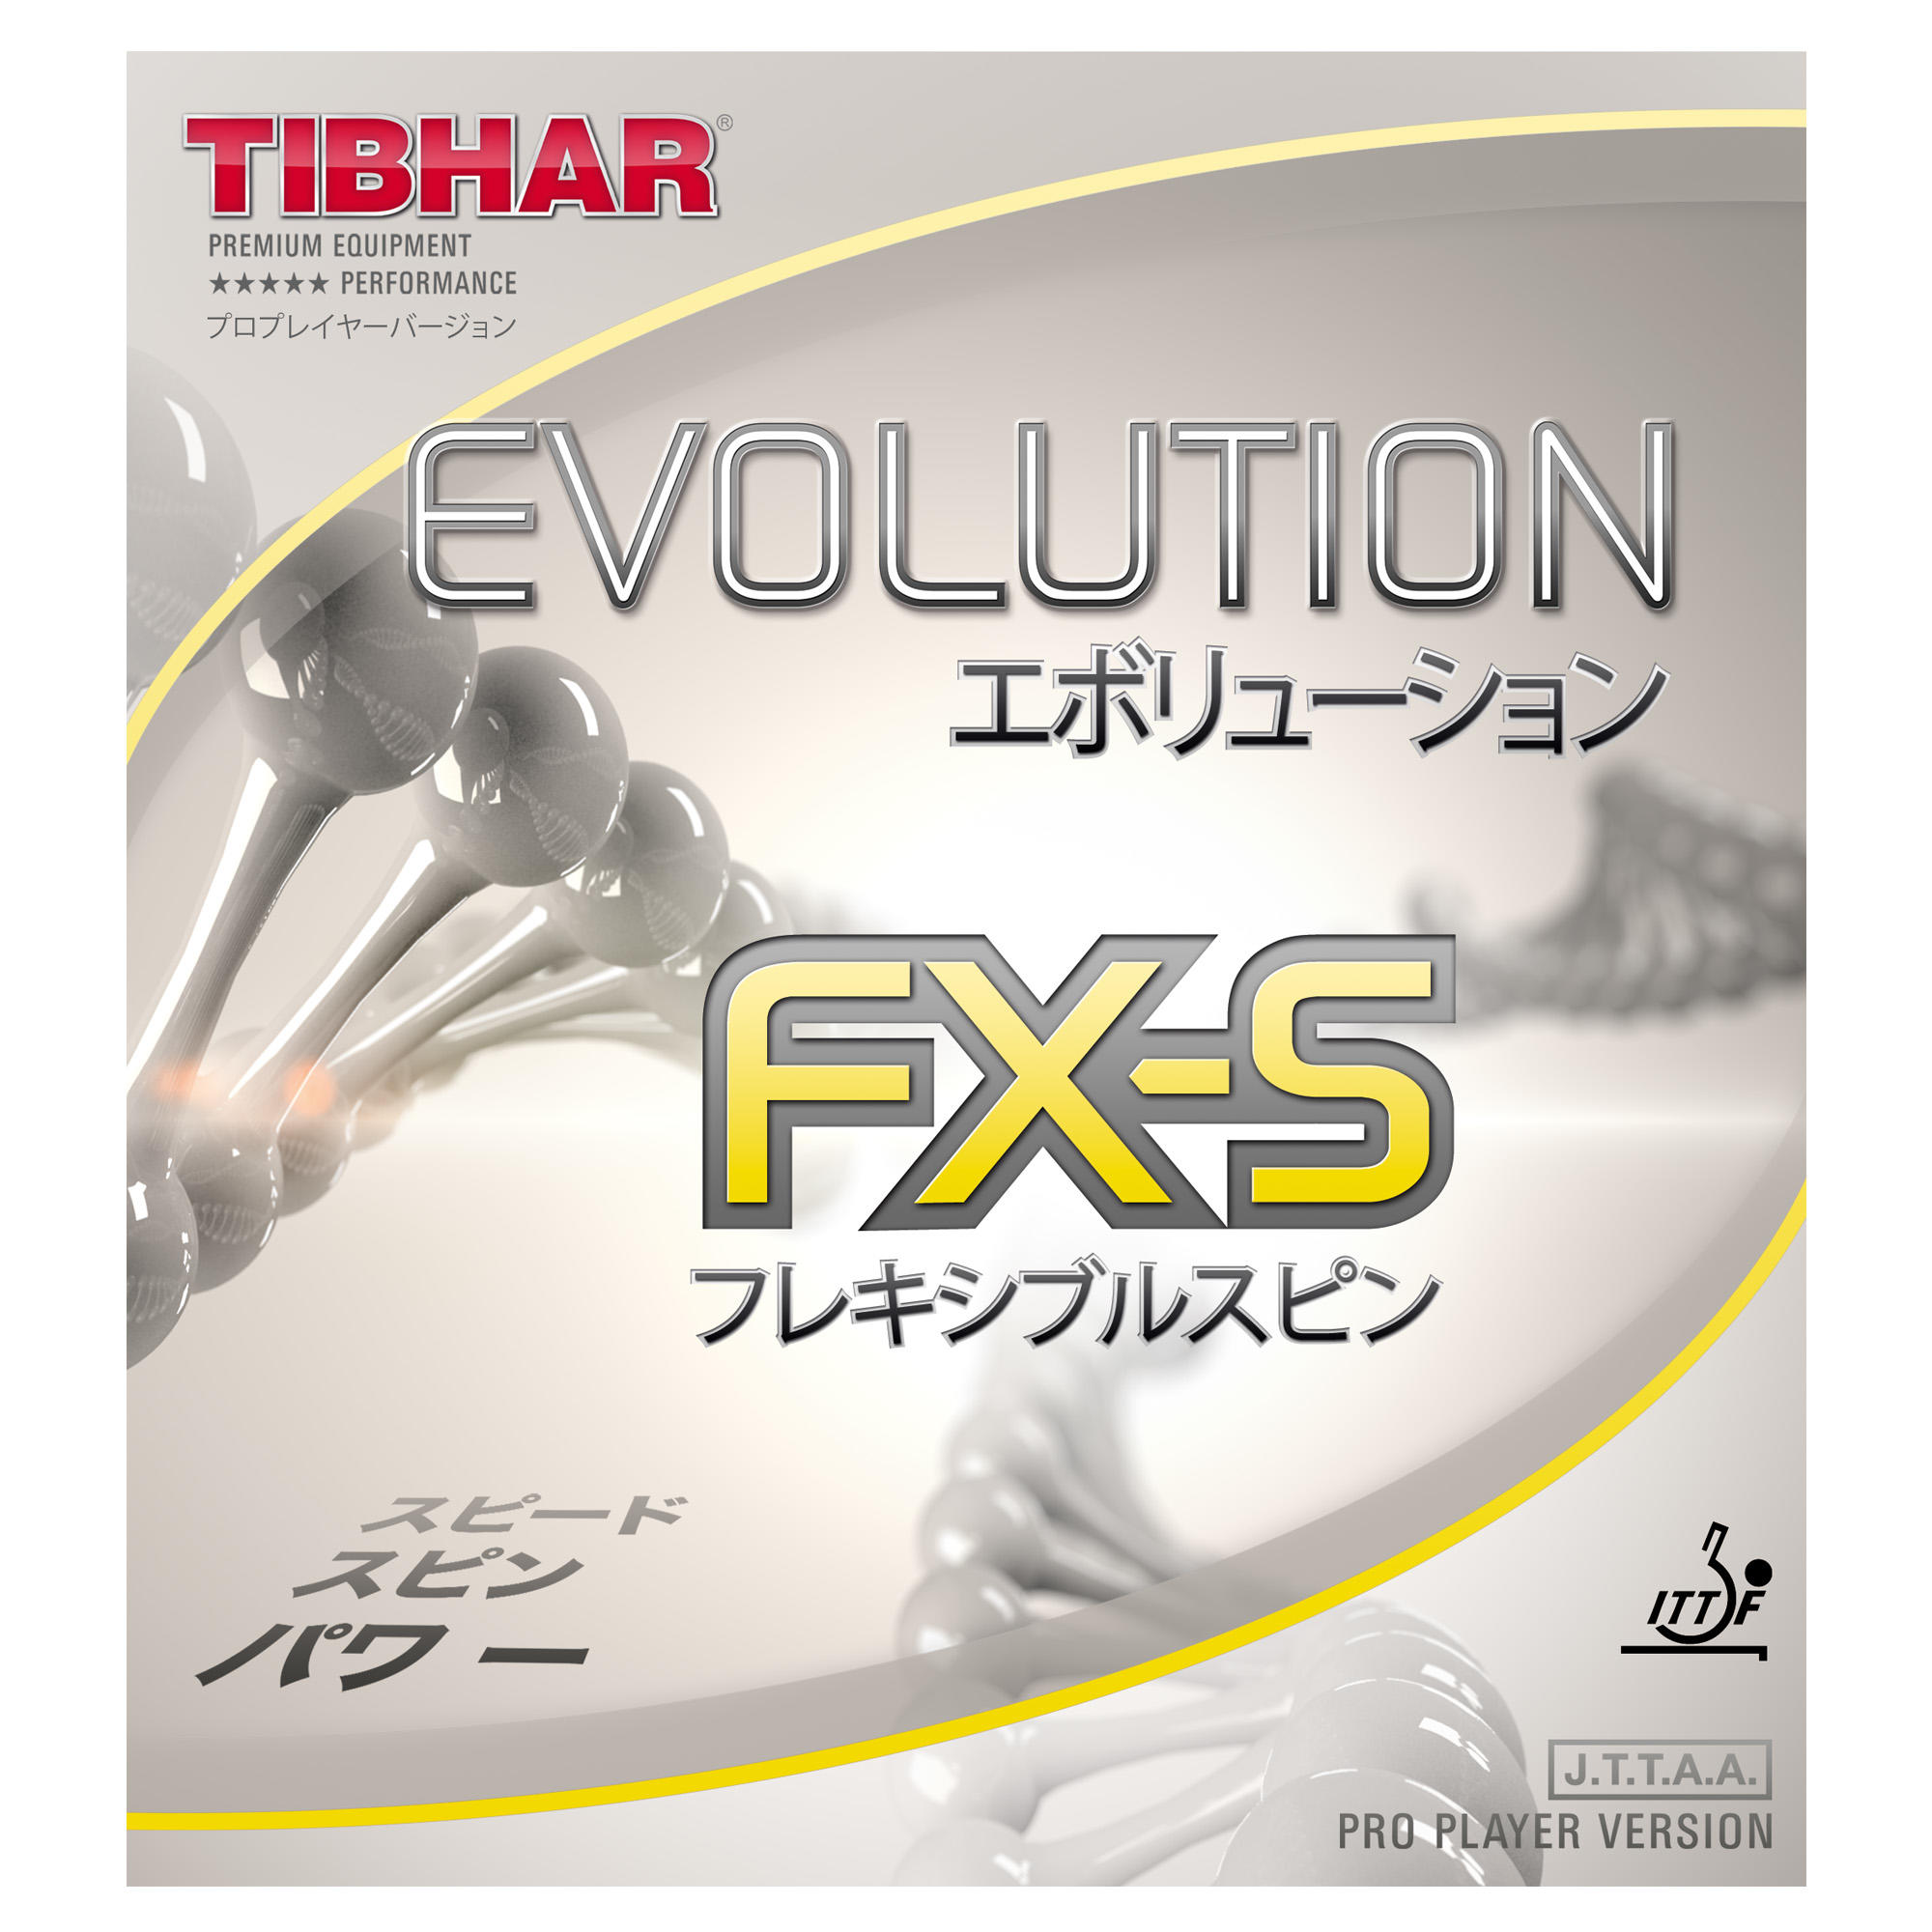 Photos - Table Tennis Bat TIBHAR Evolution Fx-s  Rubber 